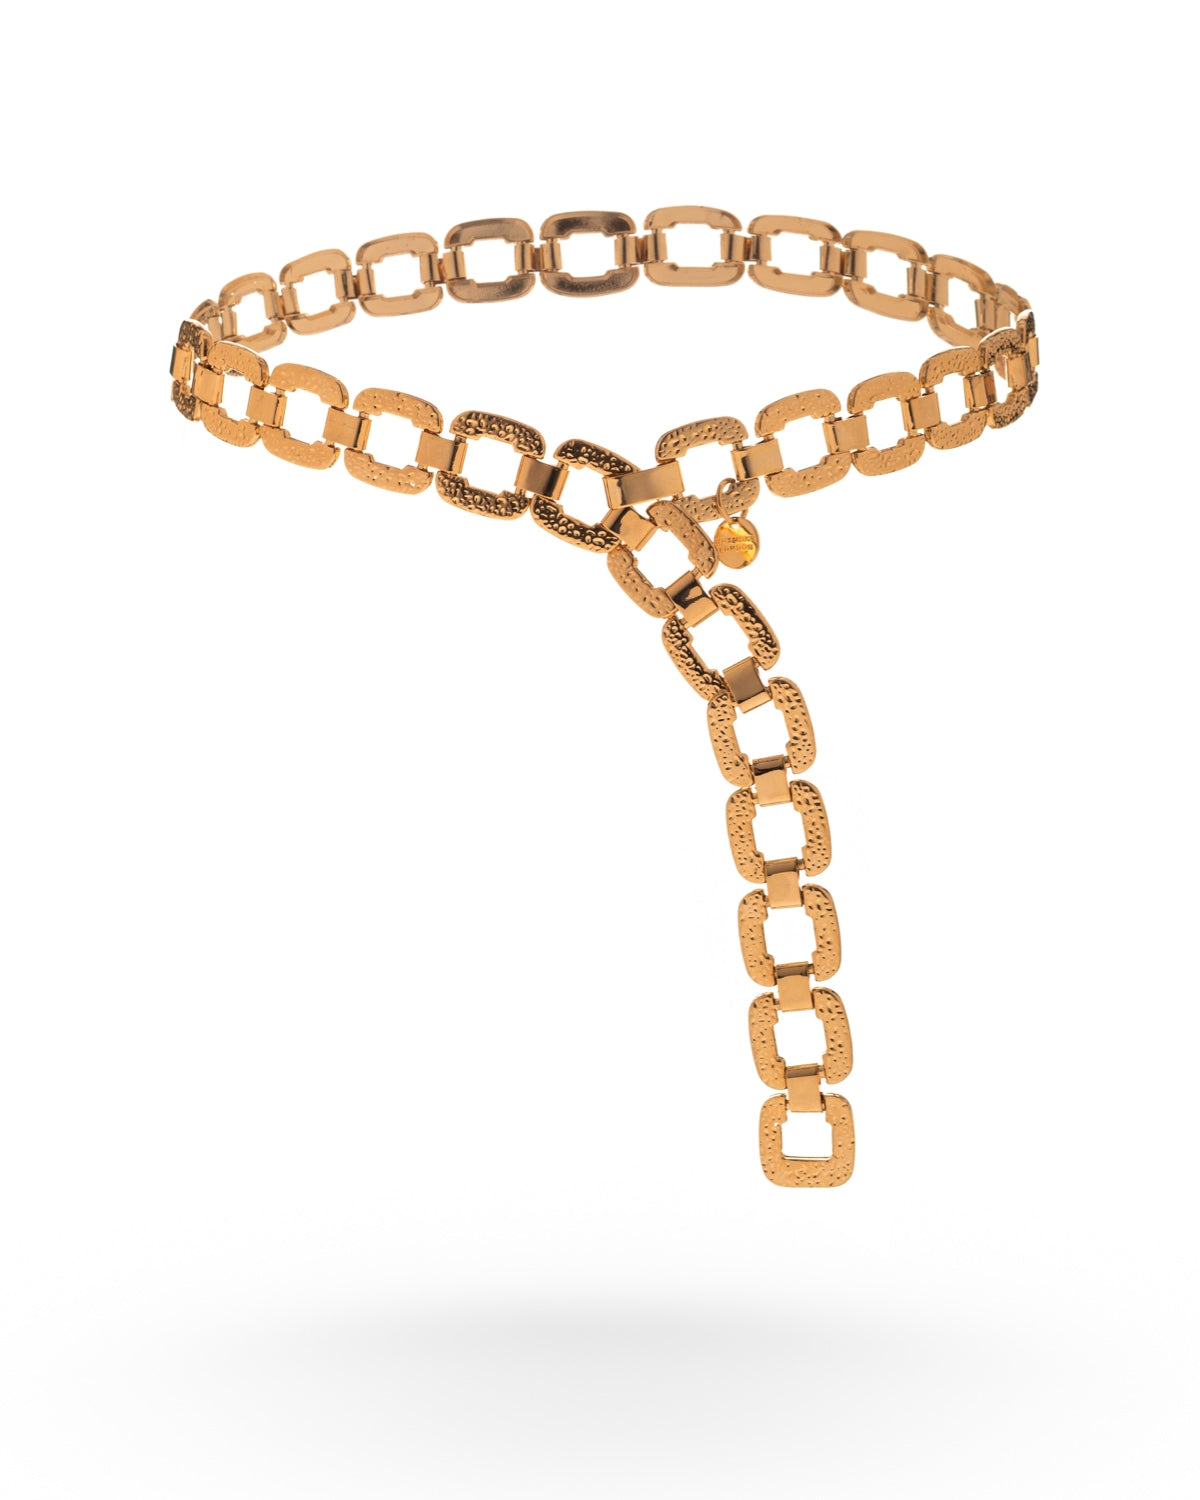 Nicole gold links chain belt